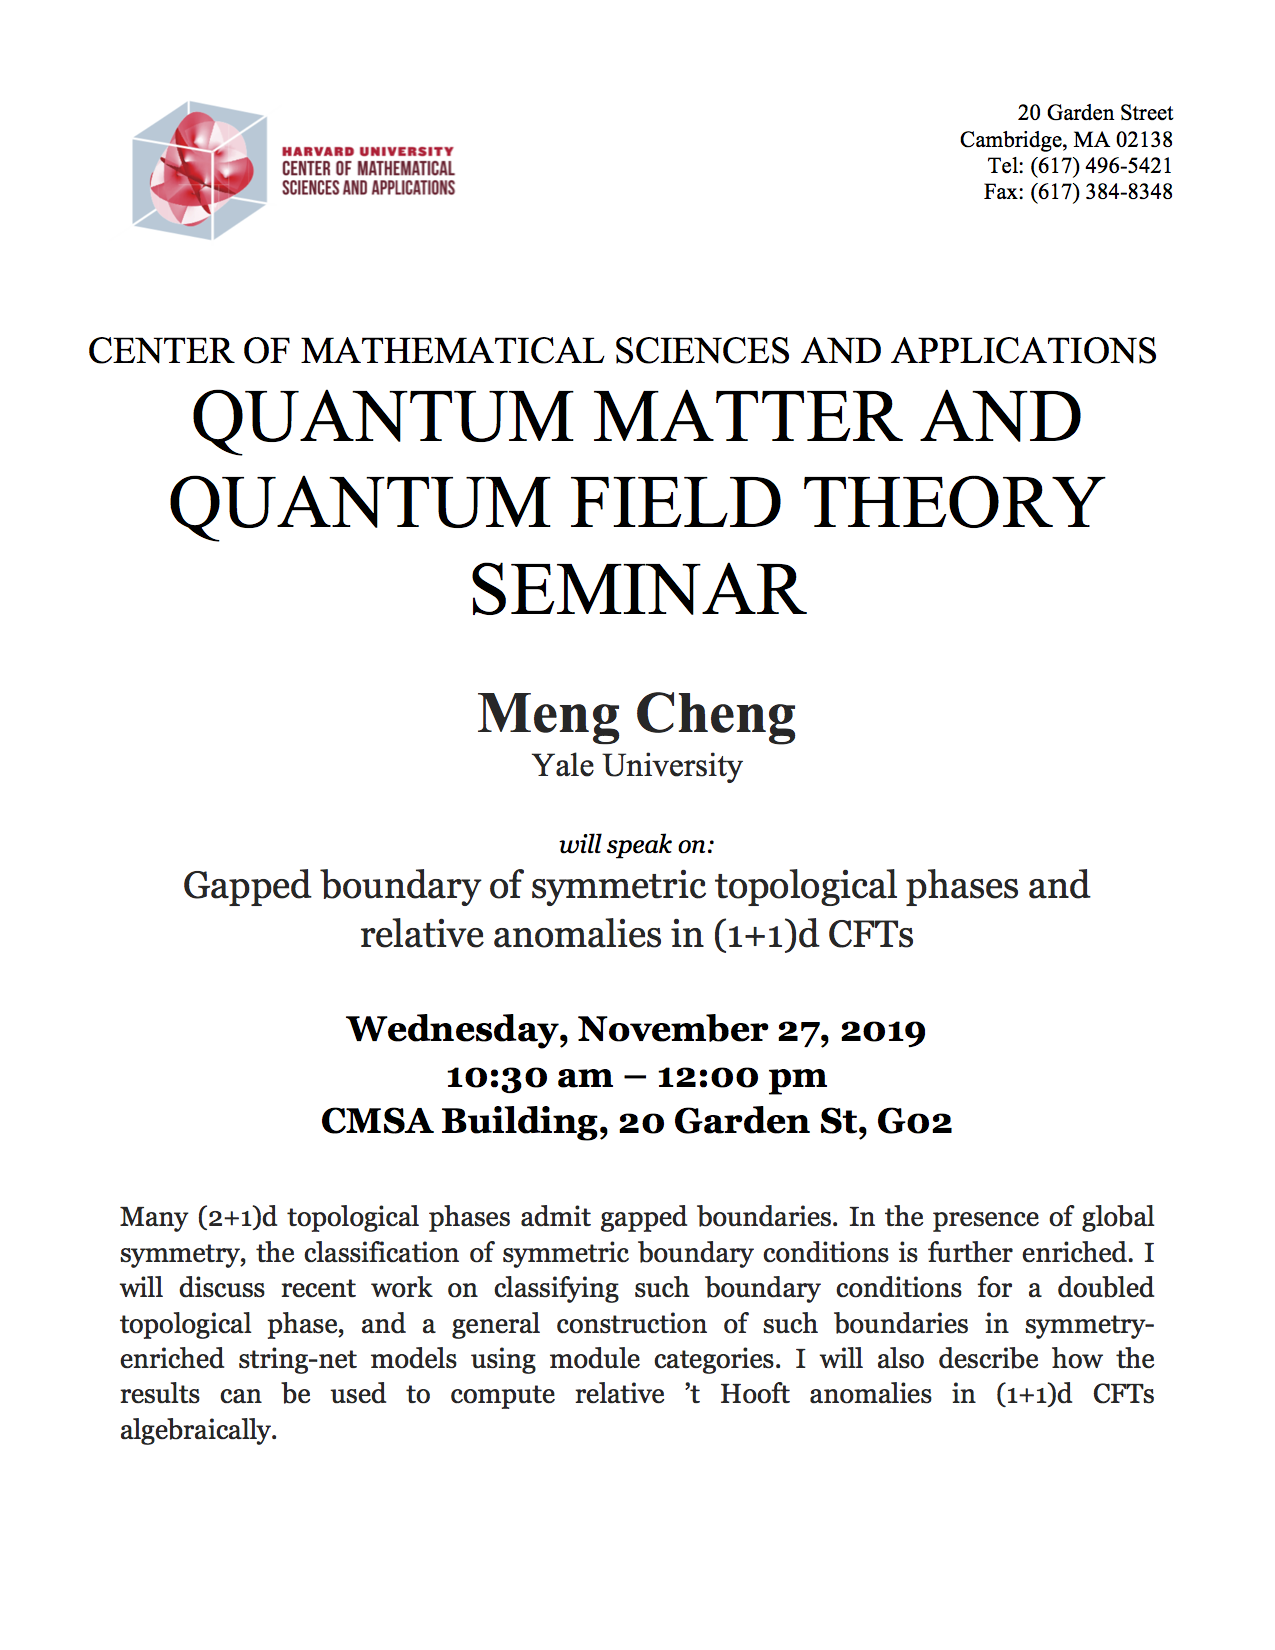 11/27/2019 Quantum Matter Seminar